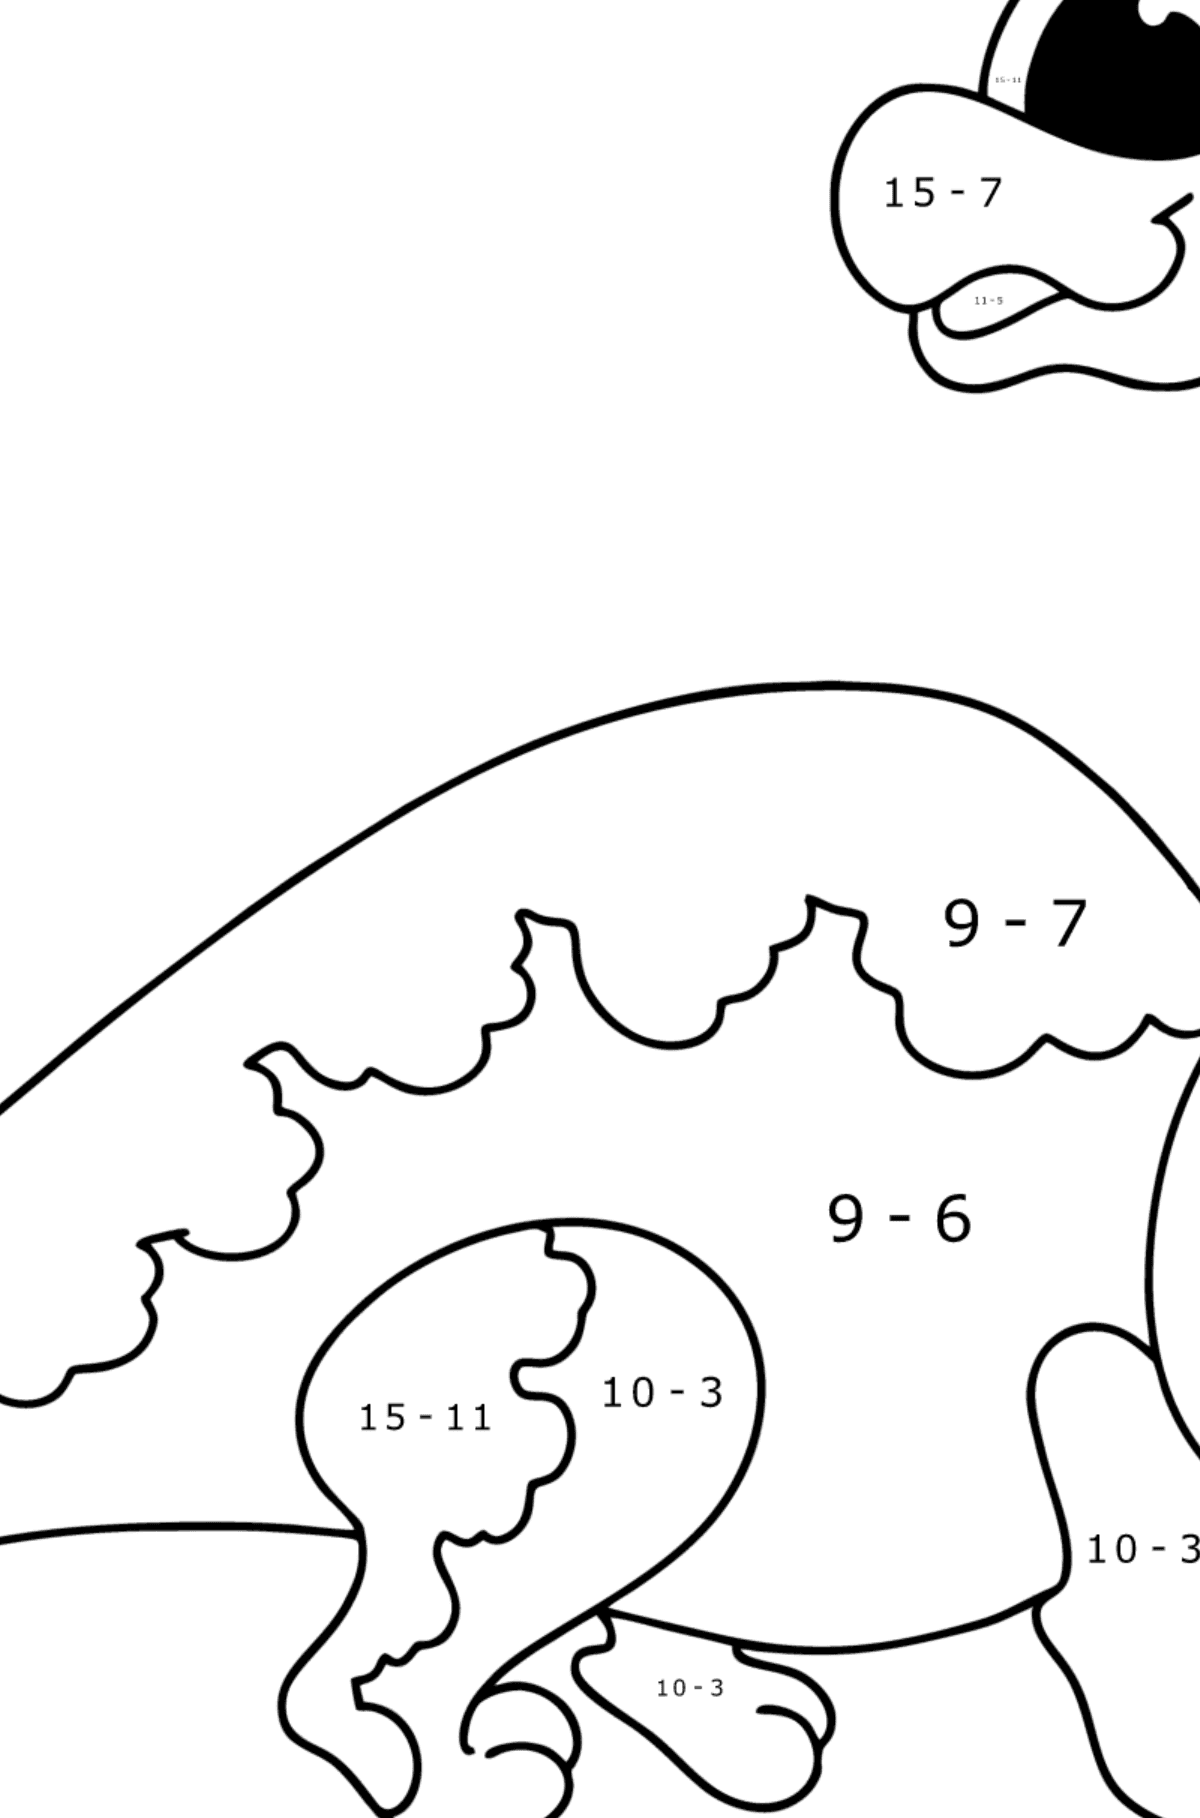 Brachiosaurus coloring page - Math Coloring - Subtraction for Kids